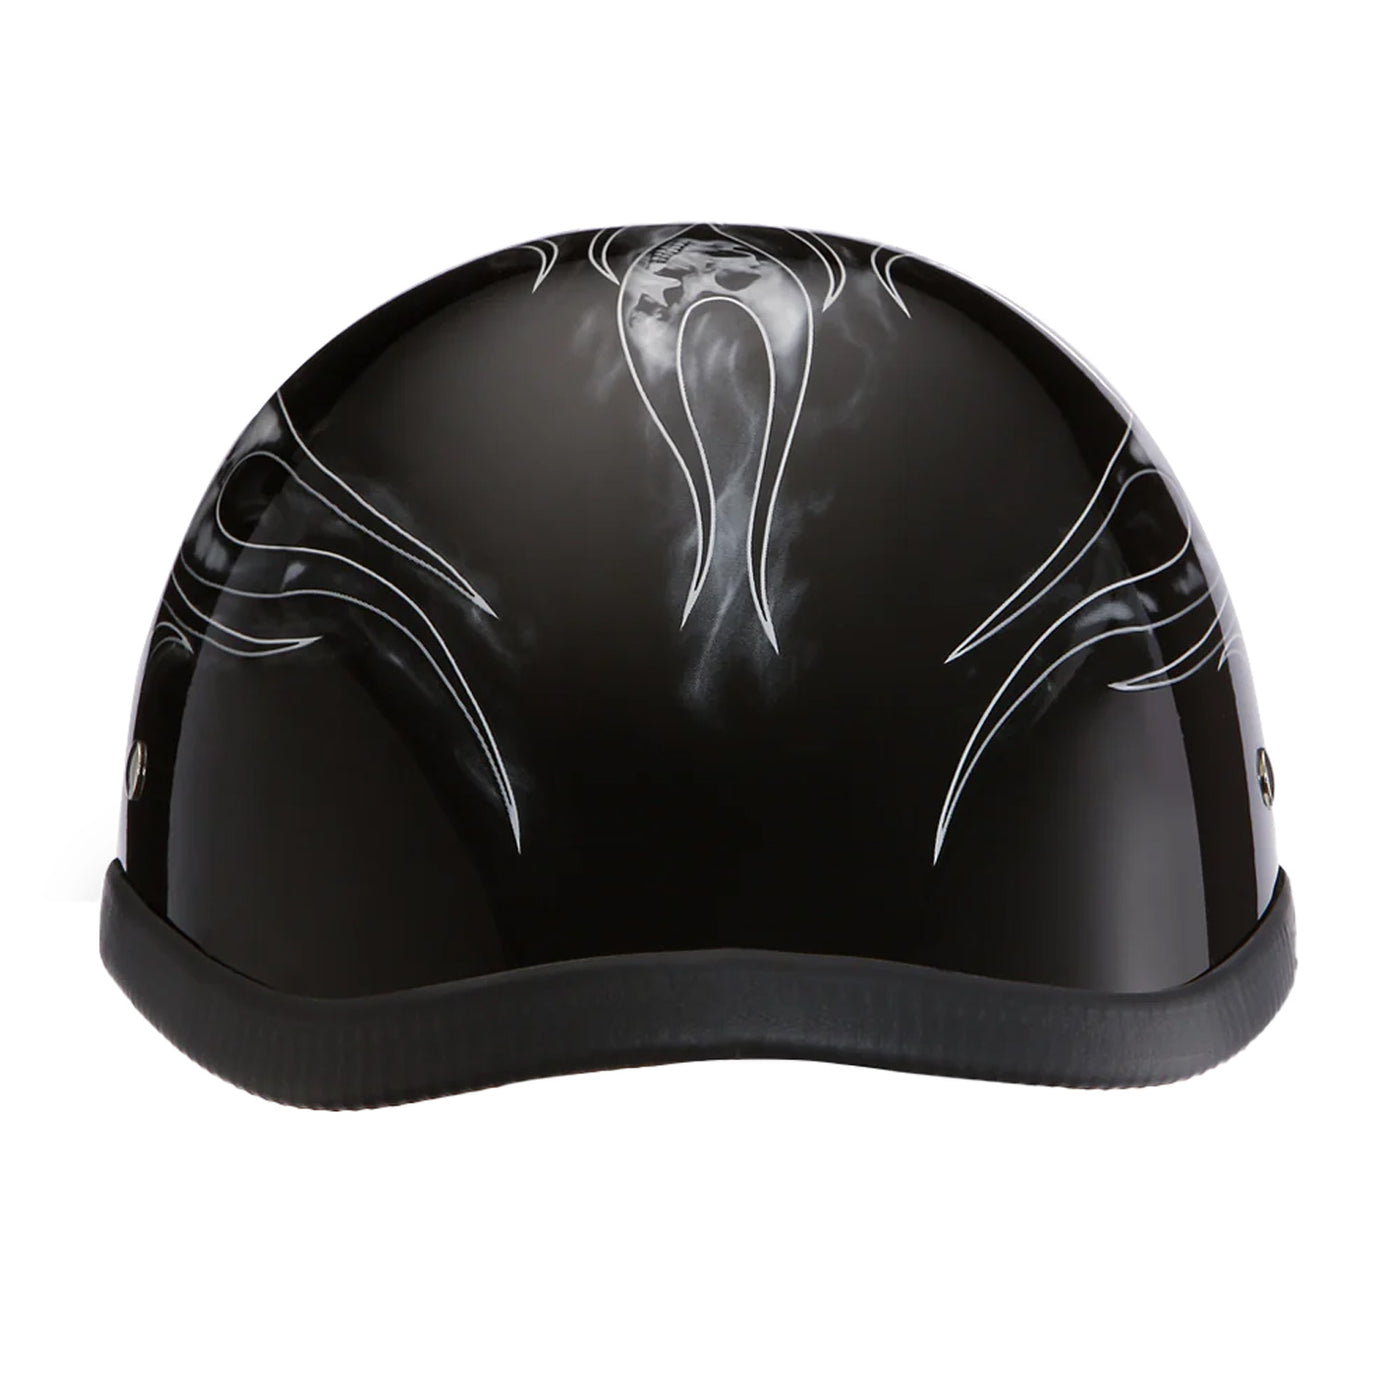 Daytona Helmets Novelty Eagle - Skull Flames